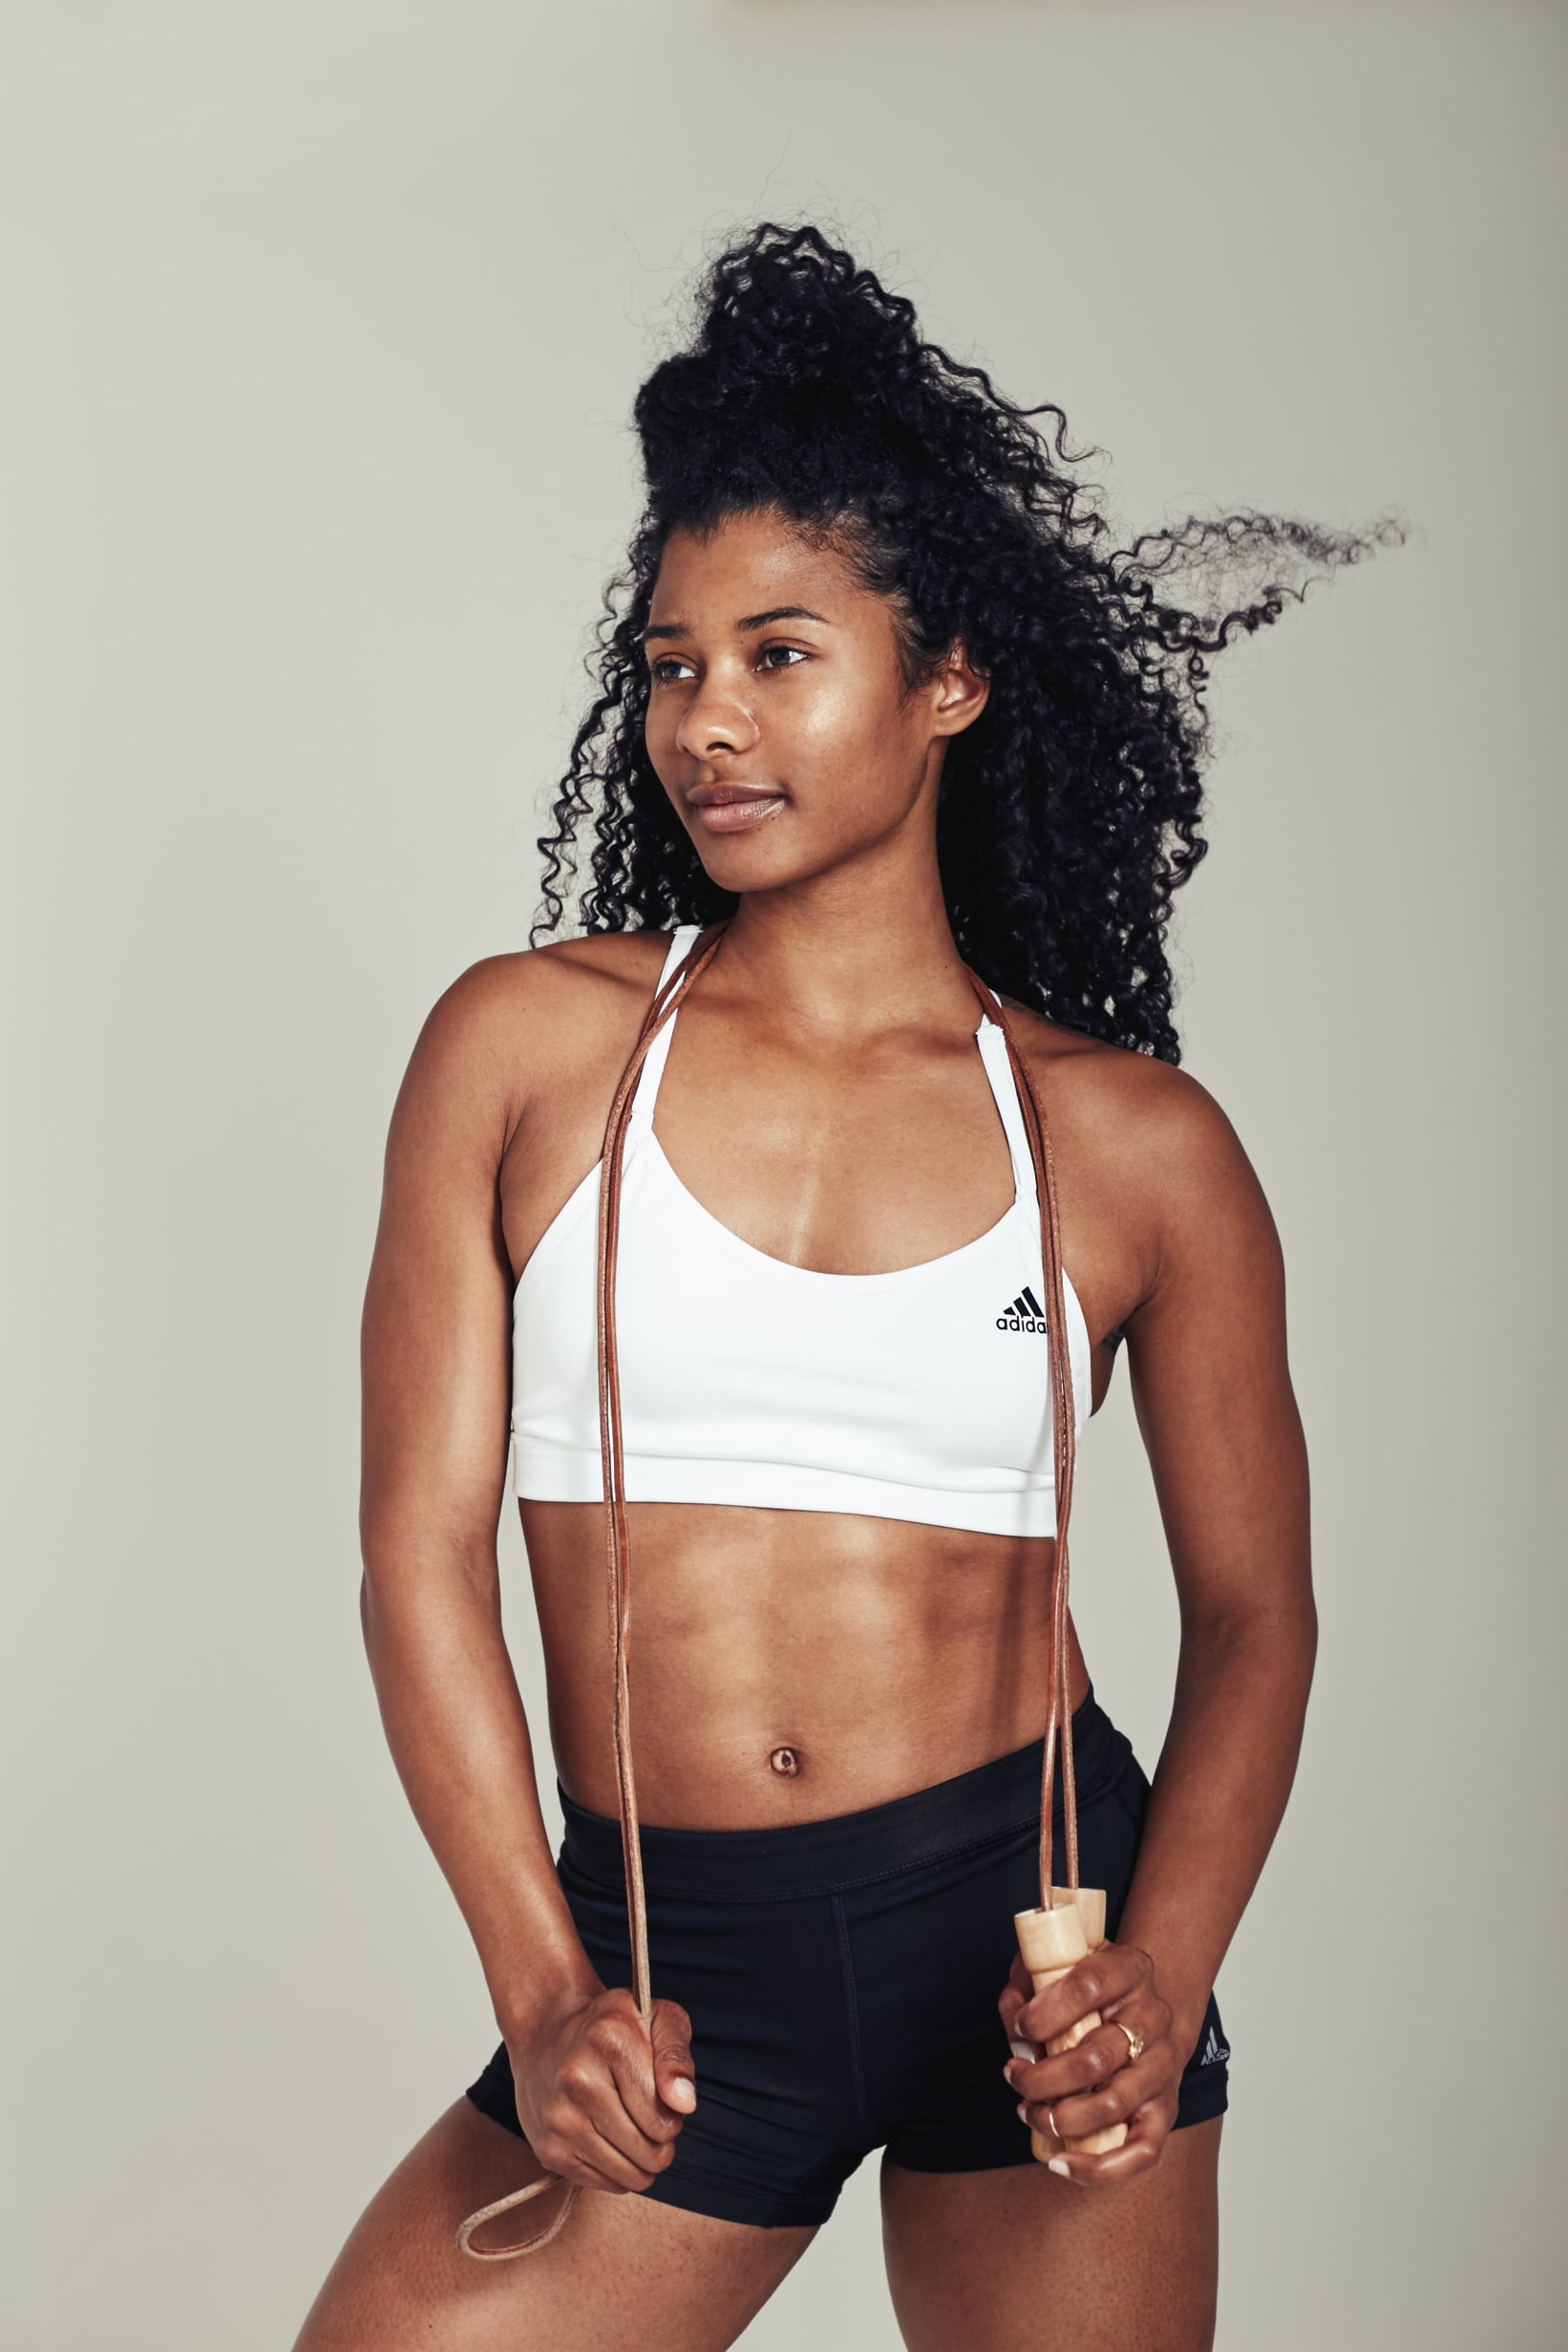 How Black Females Athletes Helped Me Love My Body